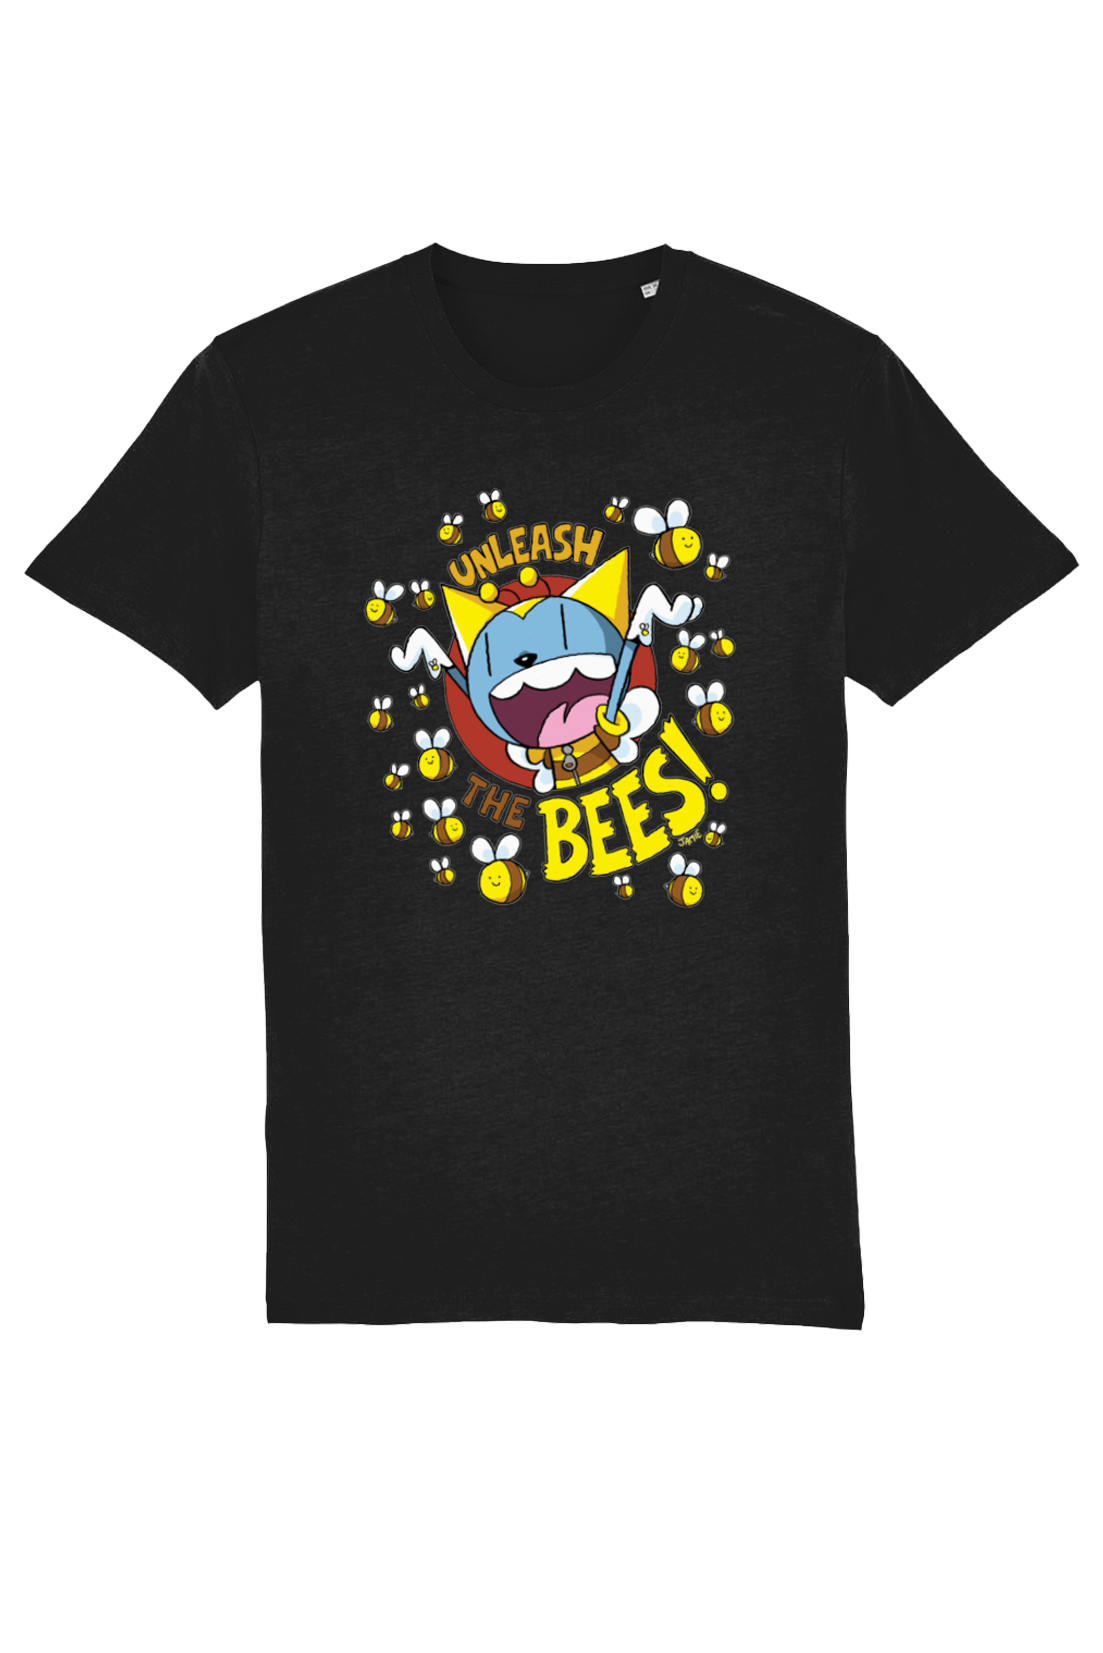 Looshkin "Unleash the bees!" adult t-shirt